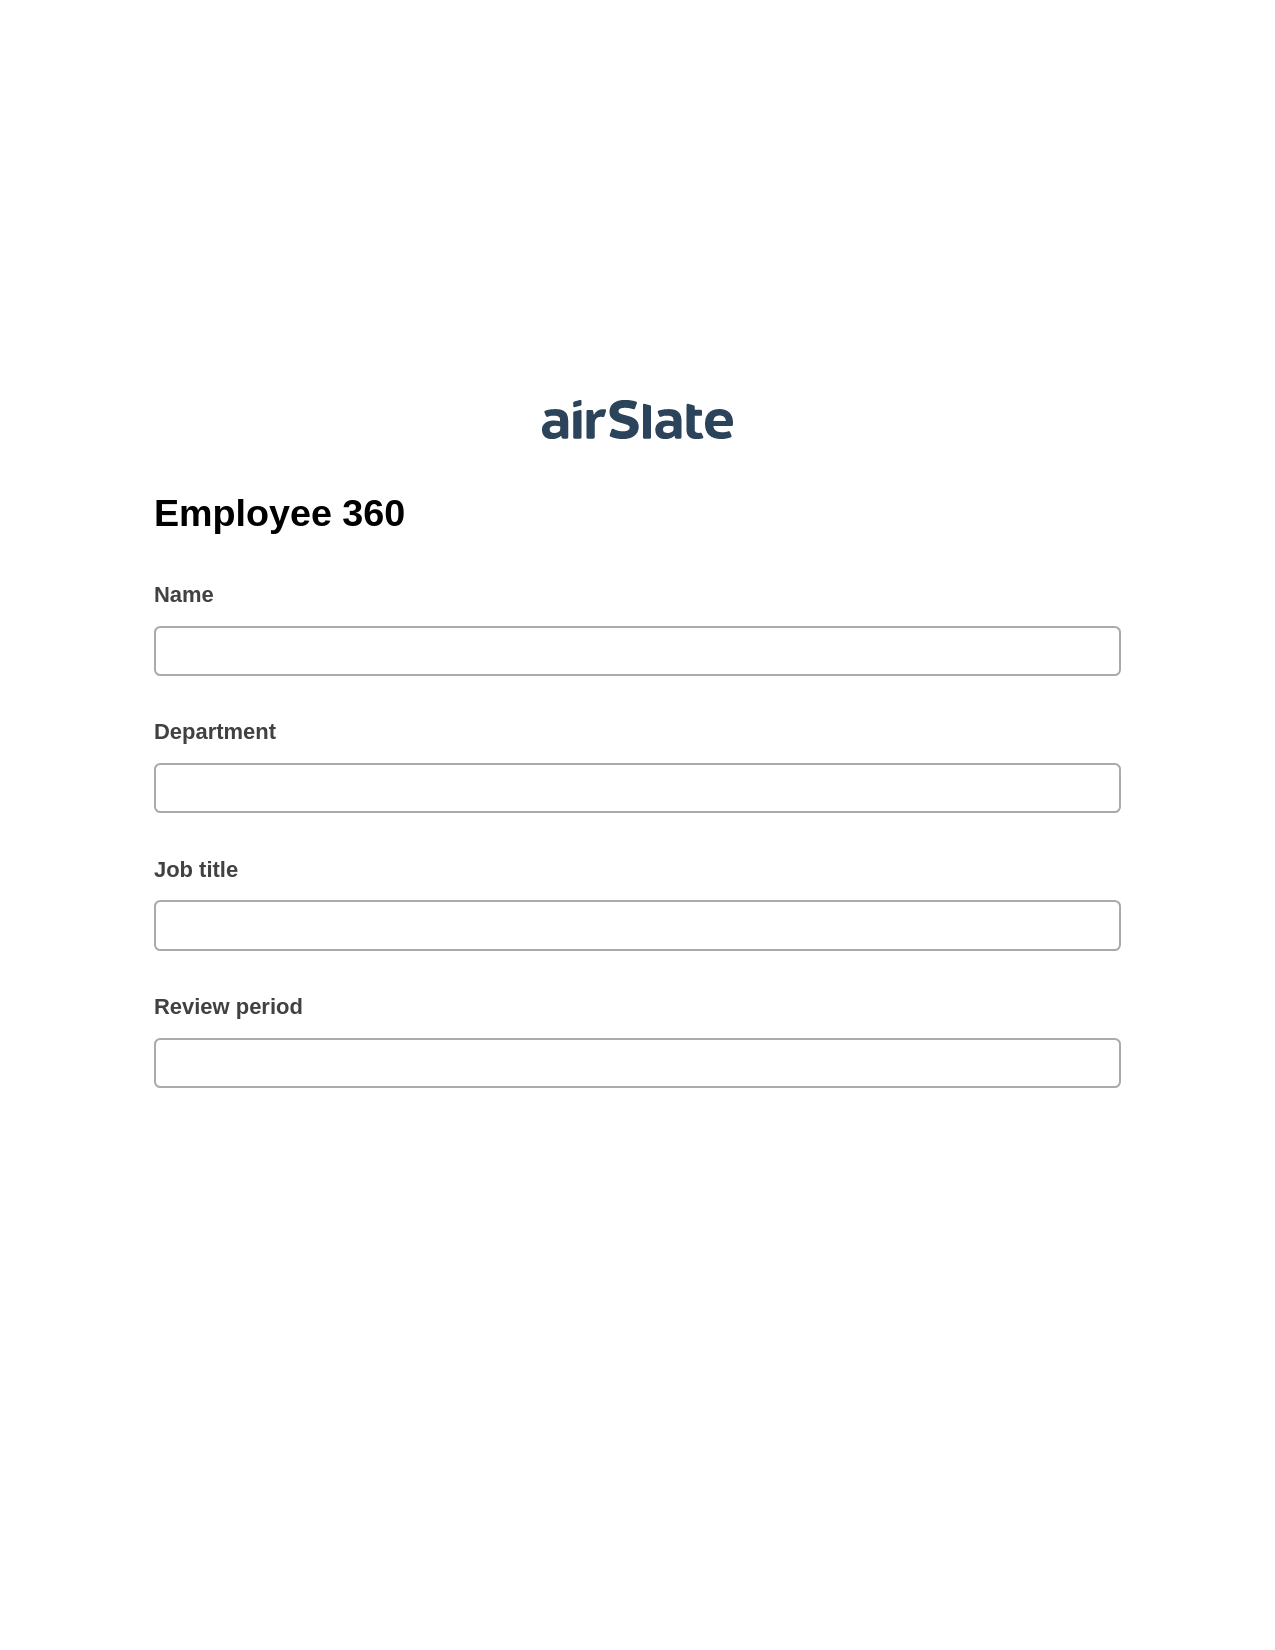 Multirole Employee 360 Pre-fill from CSV File Bot, Remove Slate Bot, Webhook Postfinish Bot